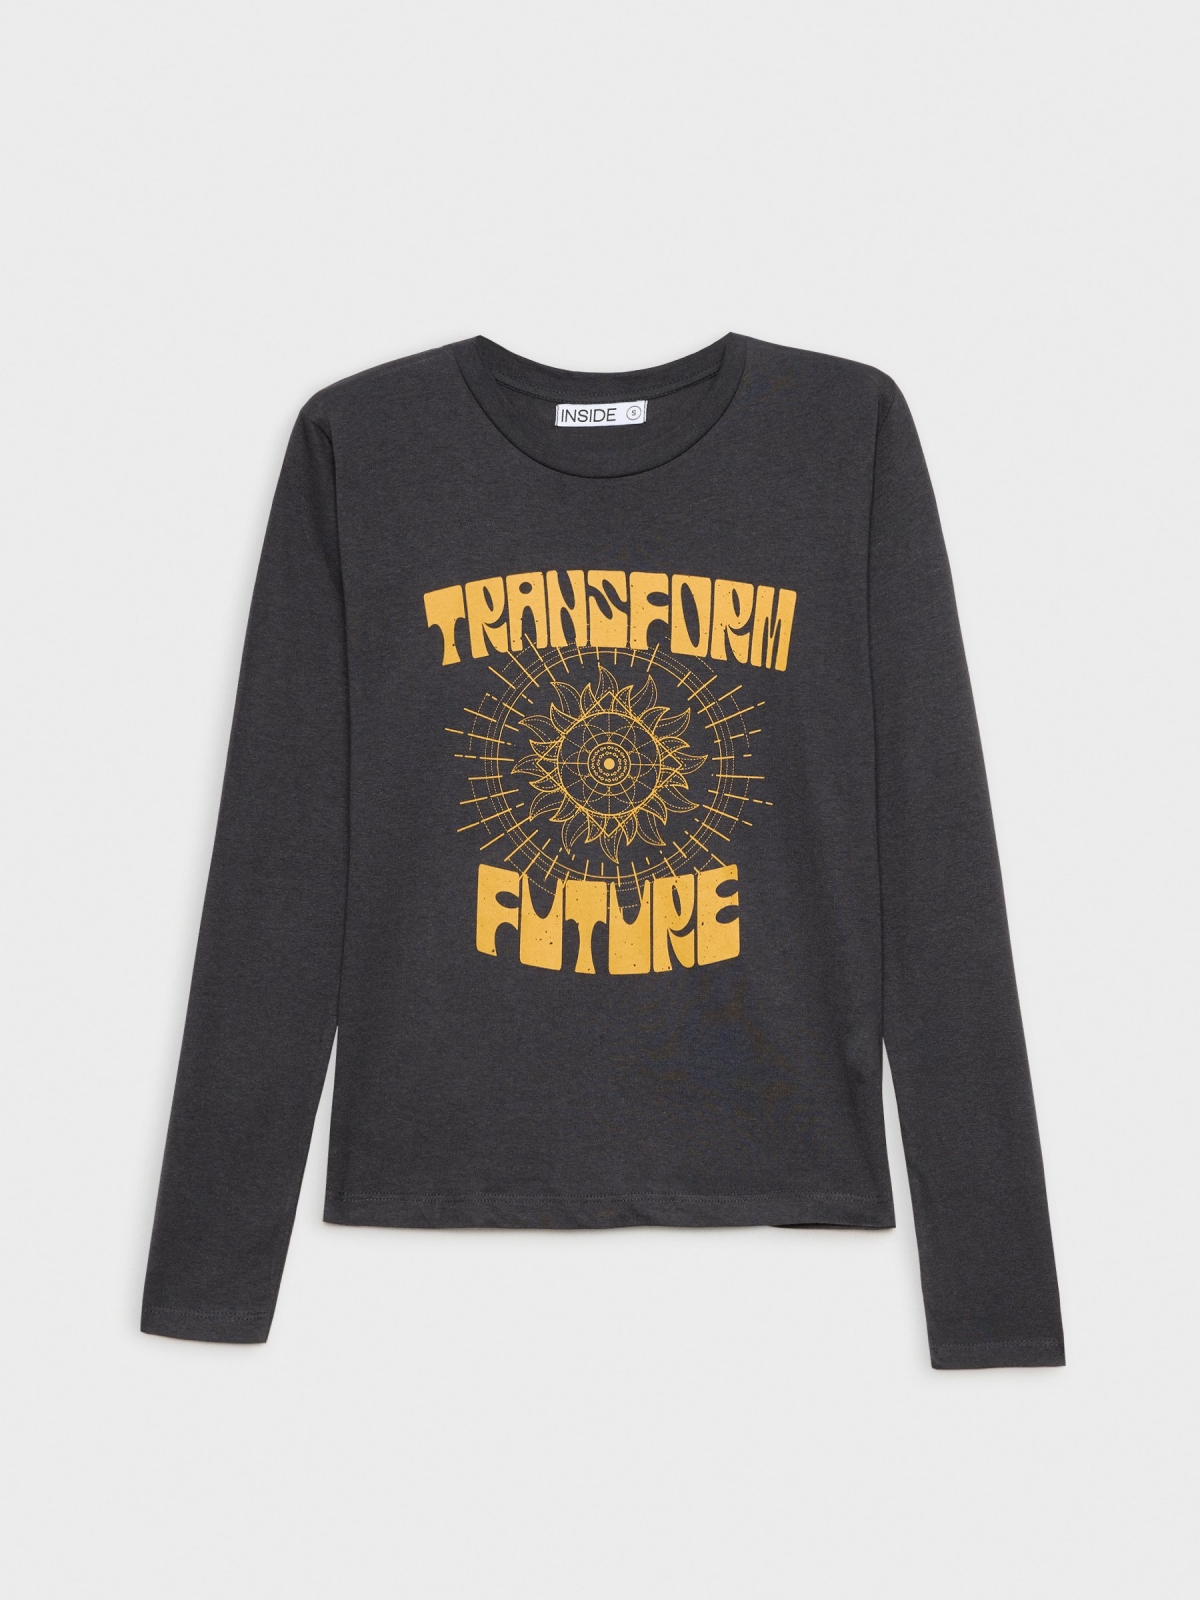  Transform Future T-shirt dark grey